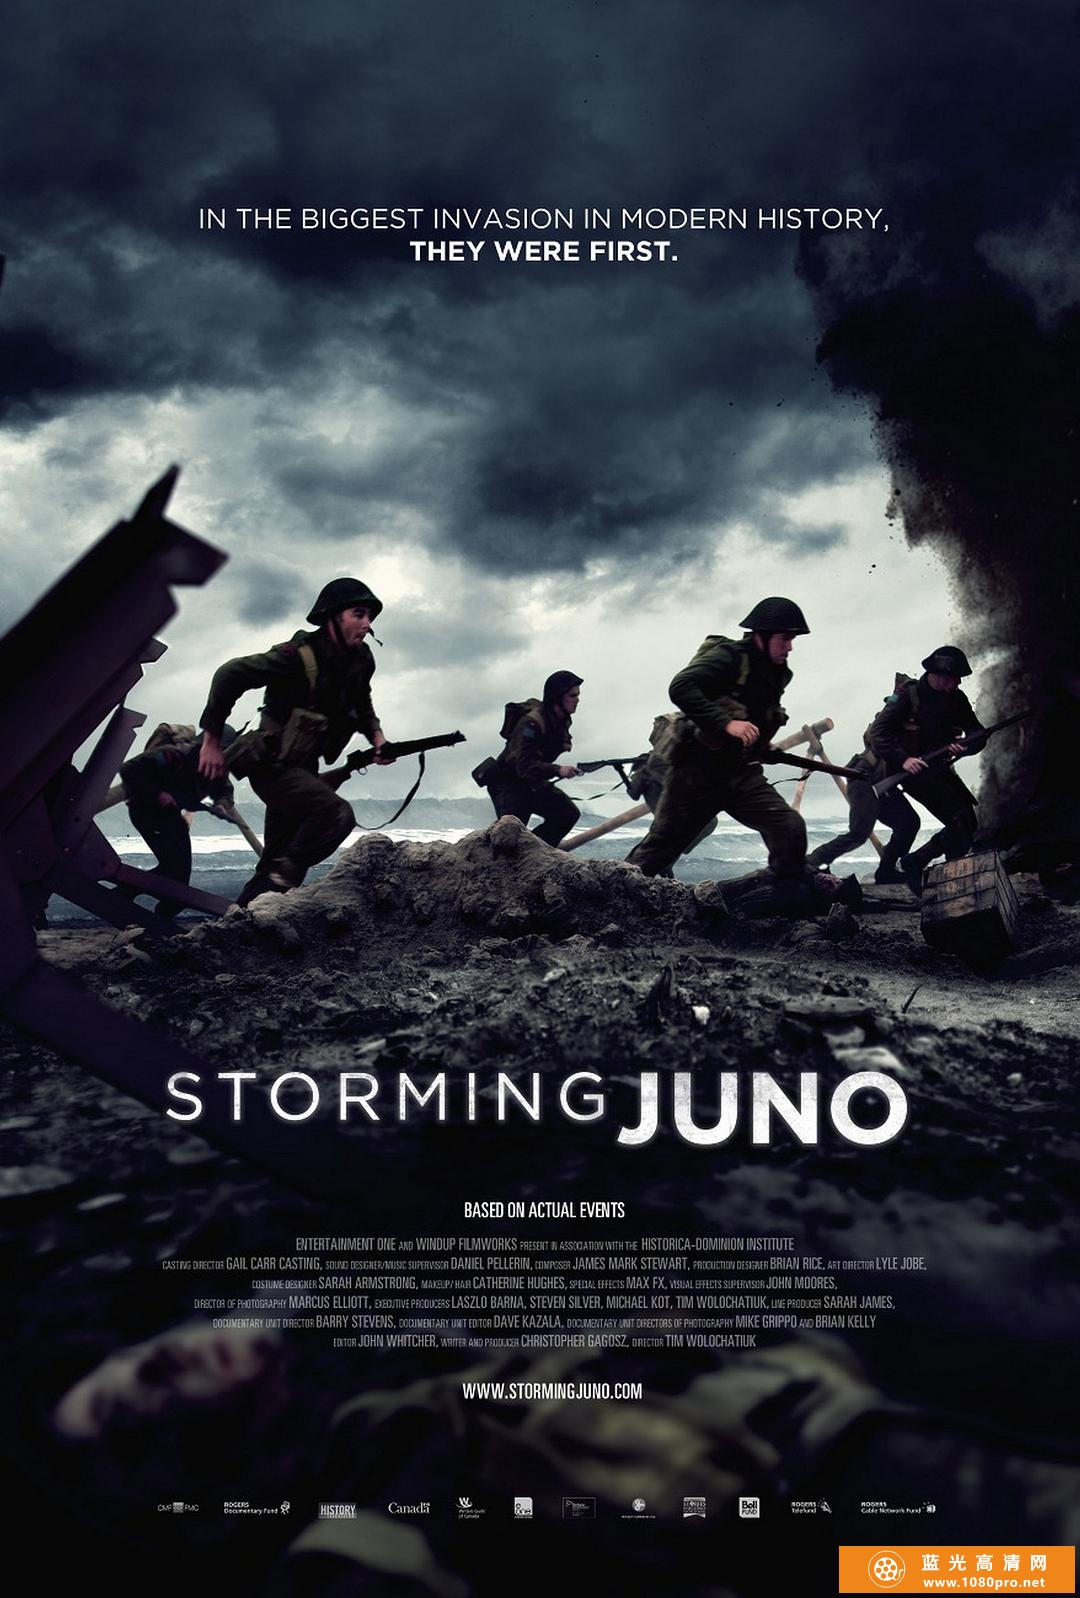 登陆朱诺滩/攻坚朱诺 Storming.Juno.2010.1080p.BluRay.REMUX.AVC.DTS-HD.MA.2.0-FGT 15.96GB